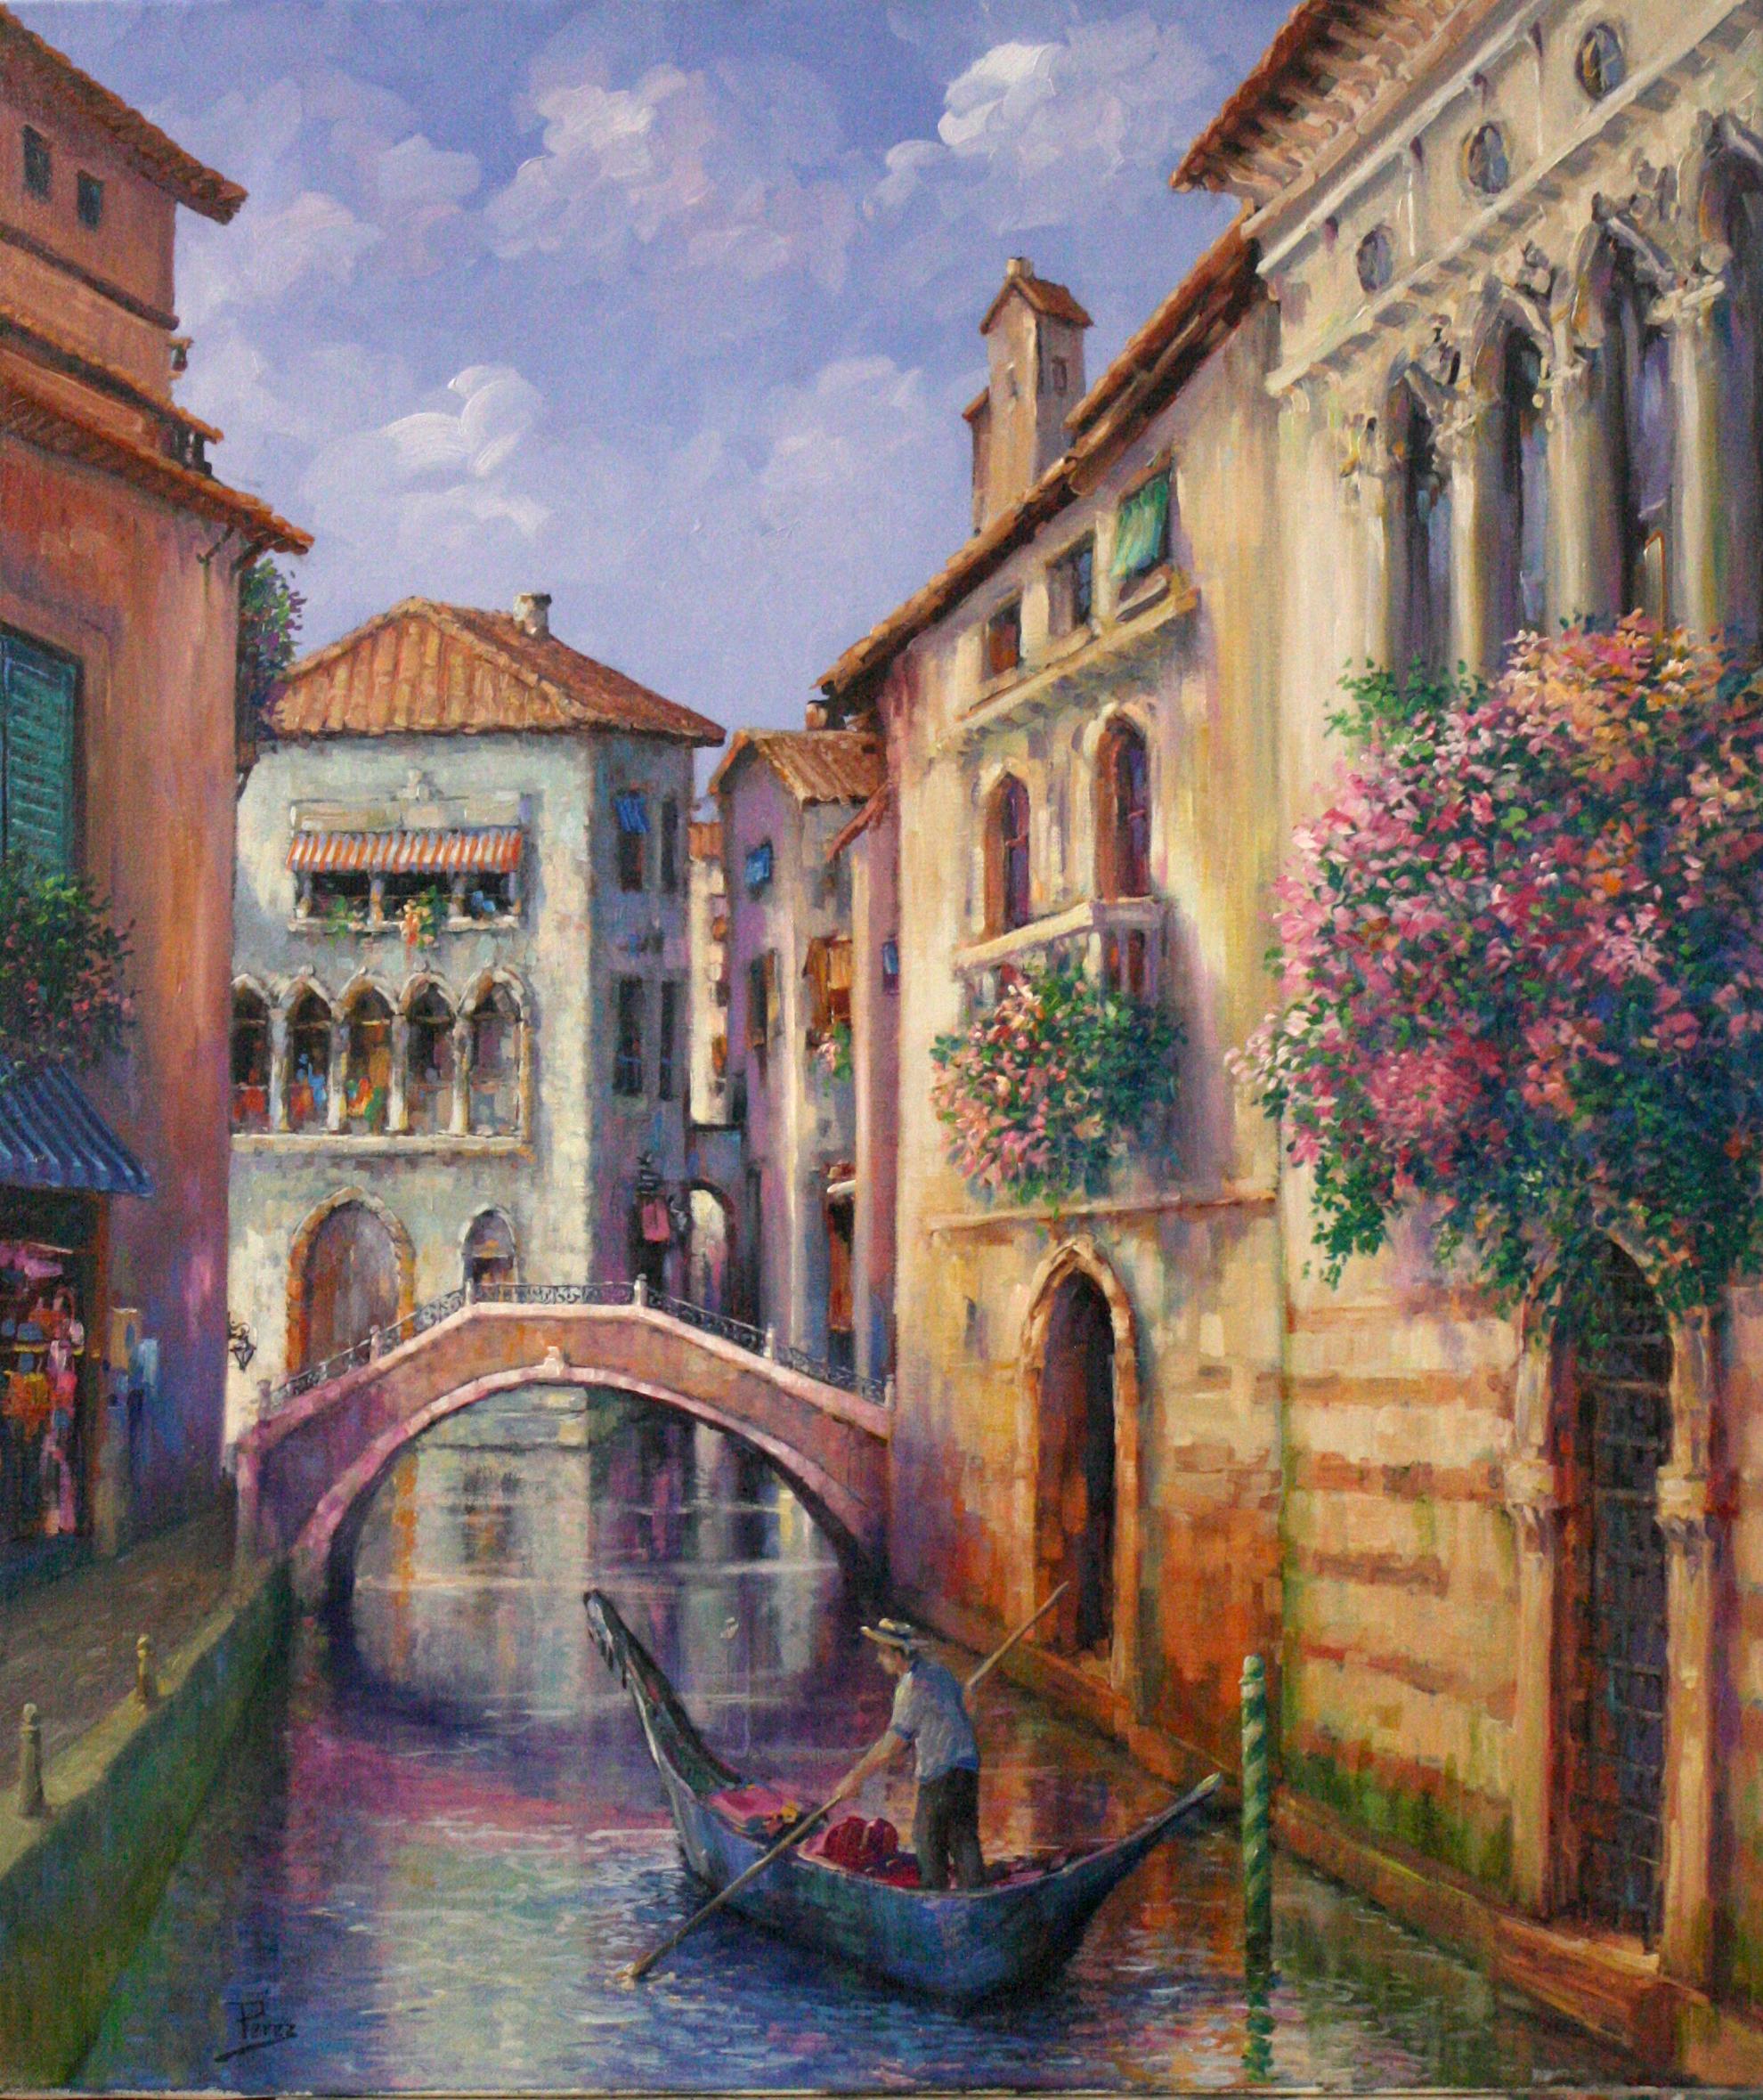 Alex Perez Landscape Painting - Romantic Venice-Oil on Canvas. Signed by Artist, comes with COA